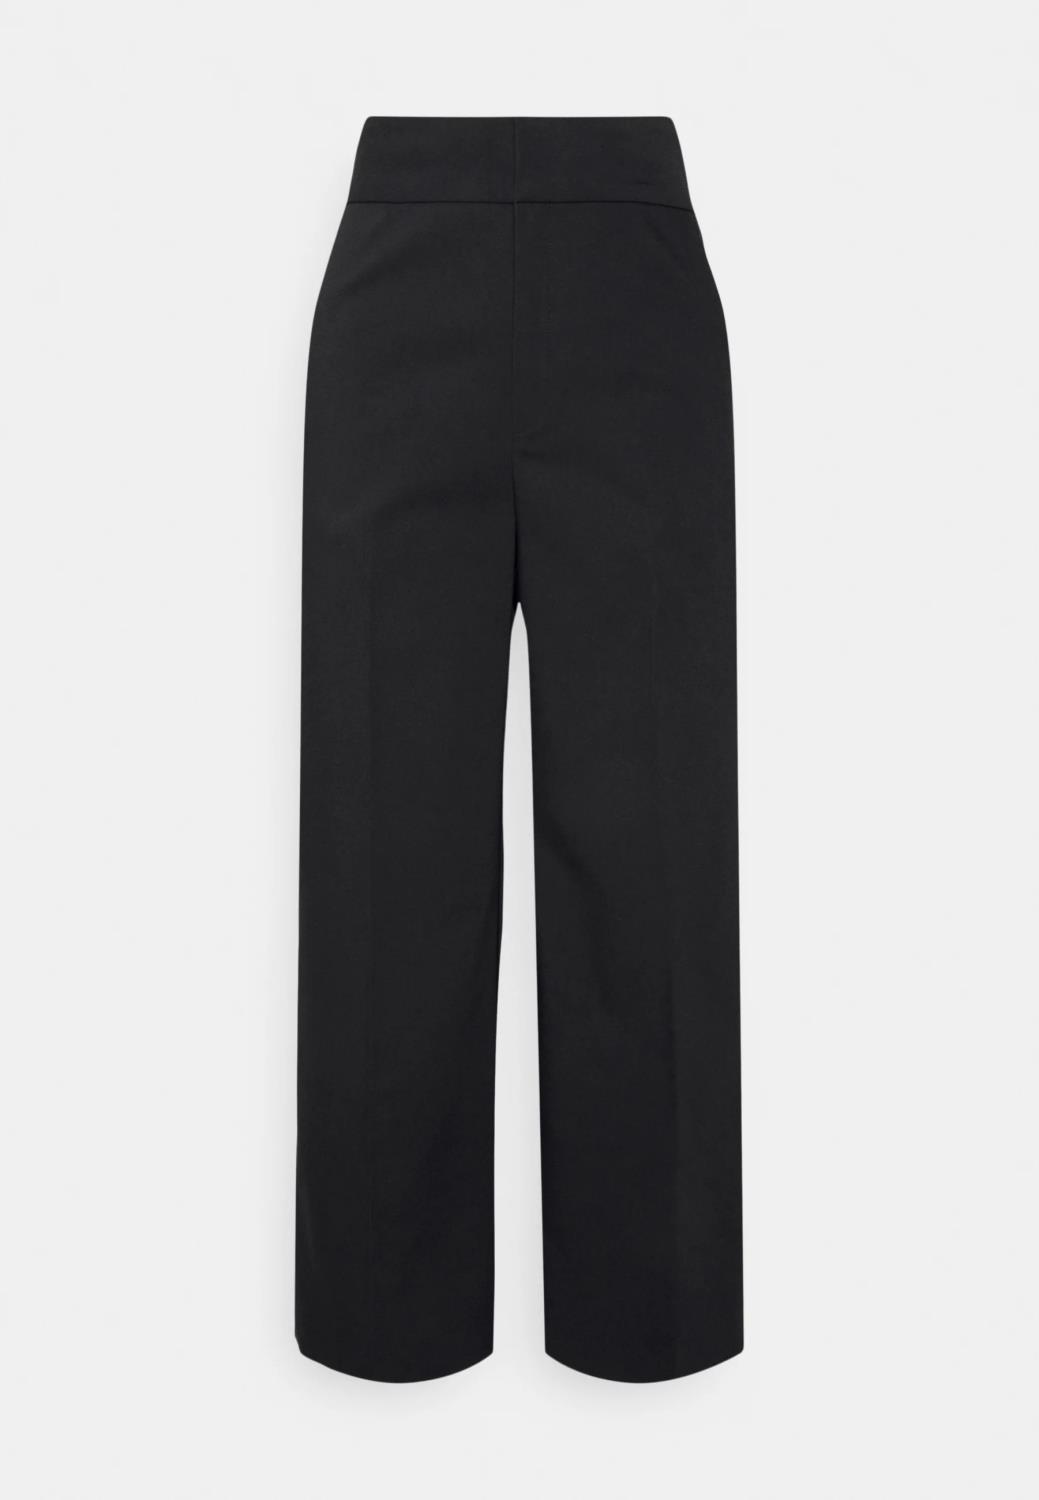 Inwear. Zella IW wide pant culotte black